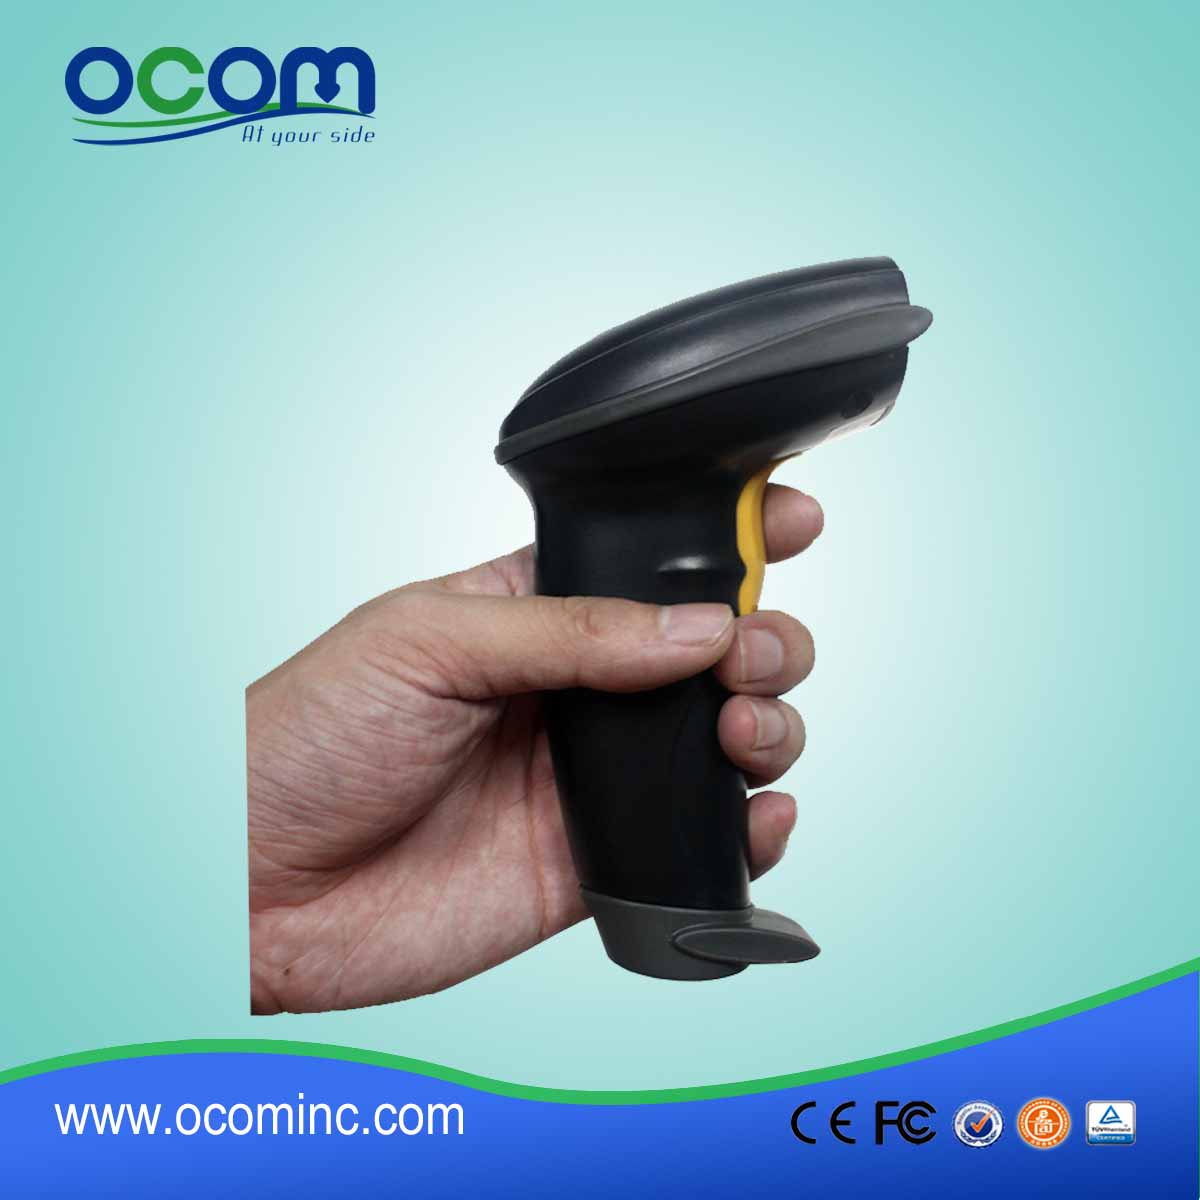 OCBS-W011 لاسلكية يدوية البسيطة الباركود بلوتوث الماسح الضوئي